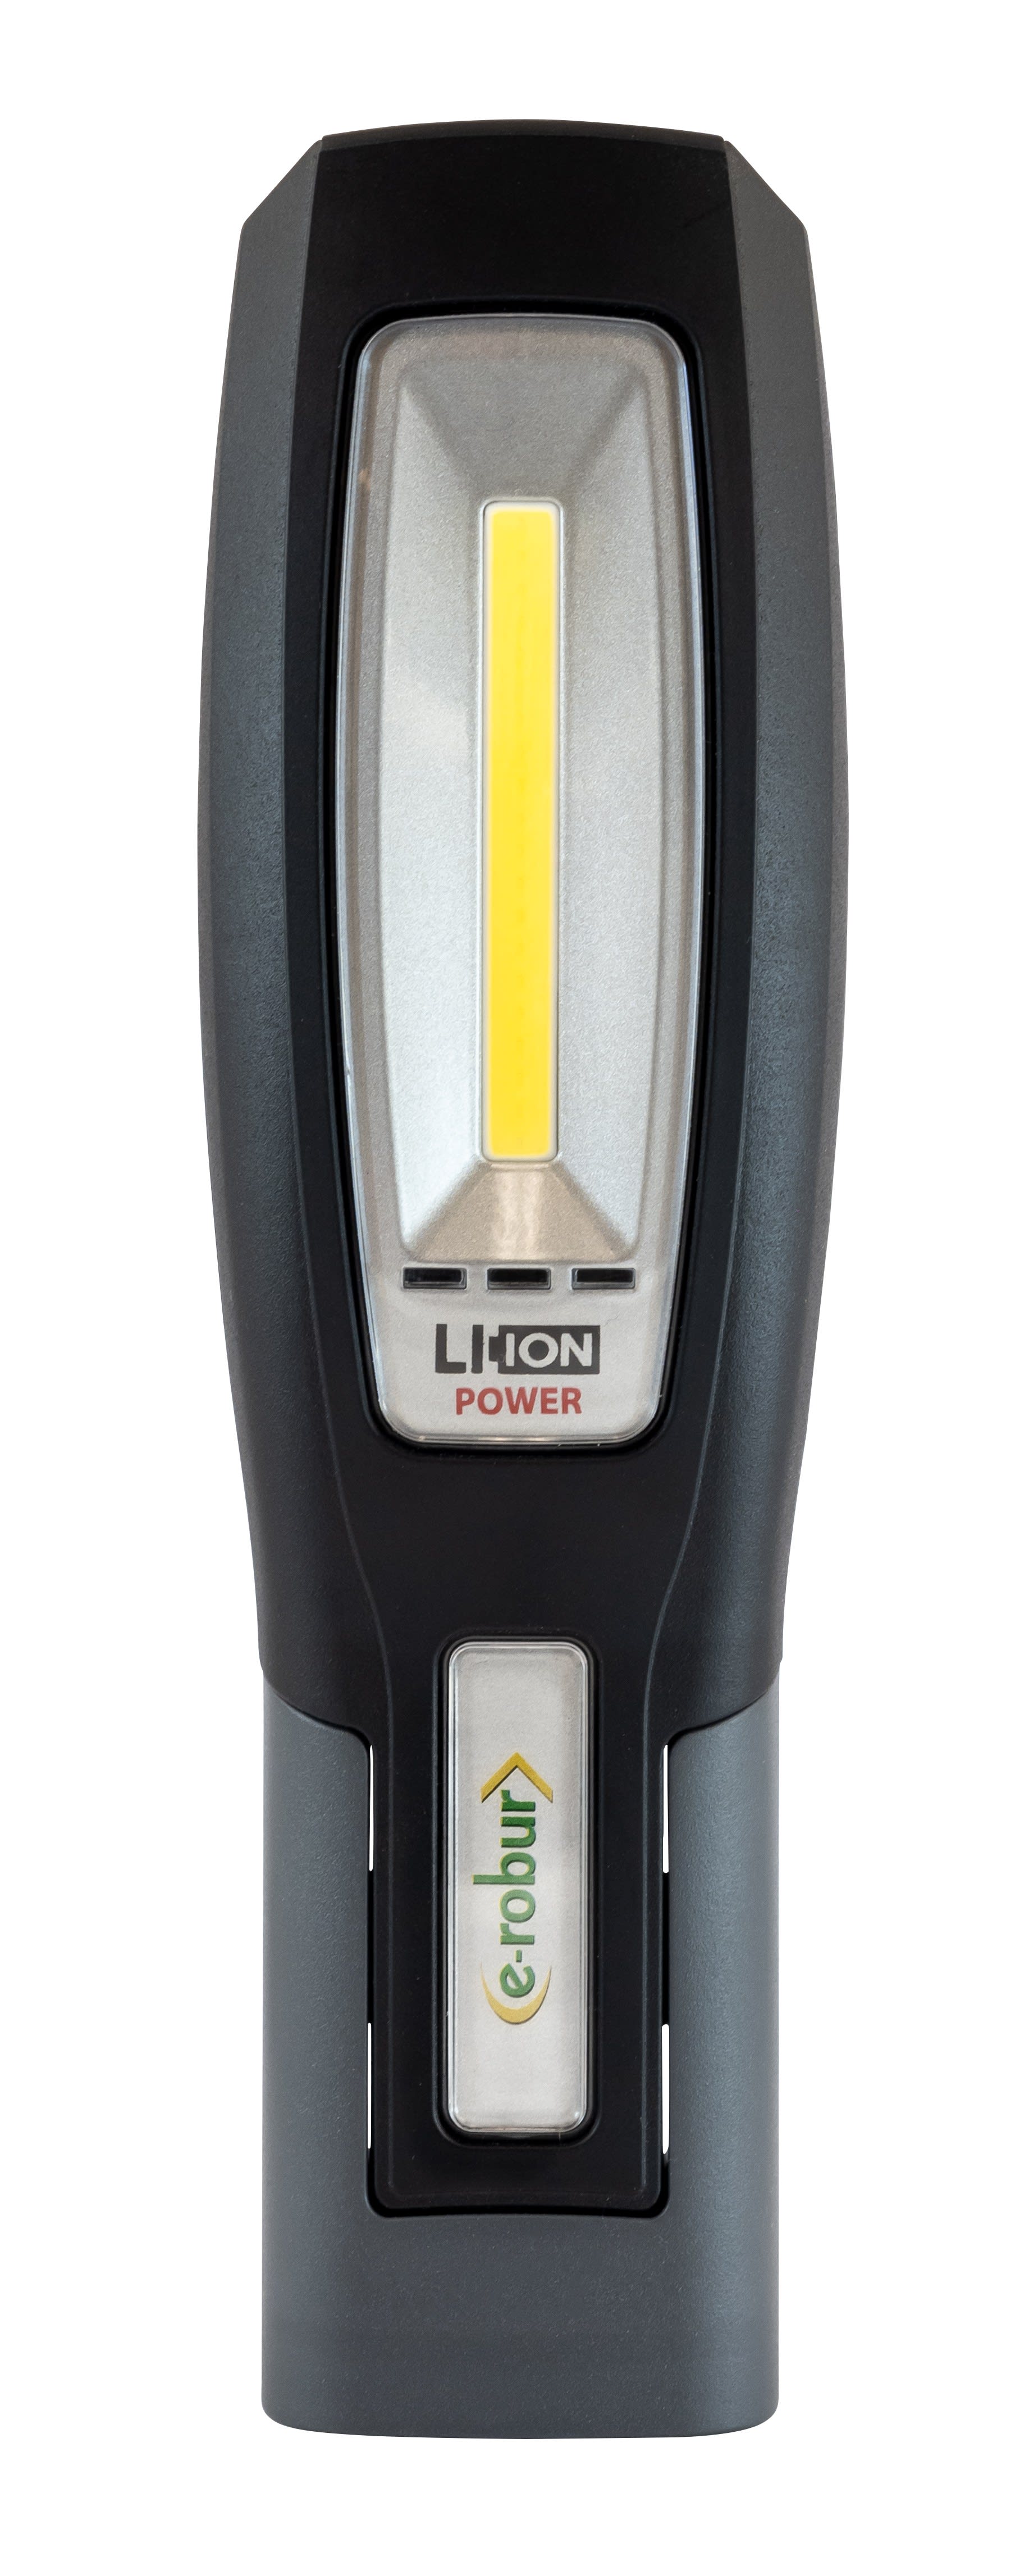 AGI Robur - Lampe baladeuse LED 400 lumen, base magnetique, orientable, IP54